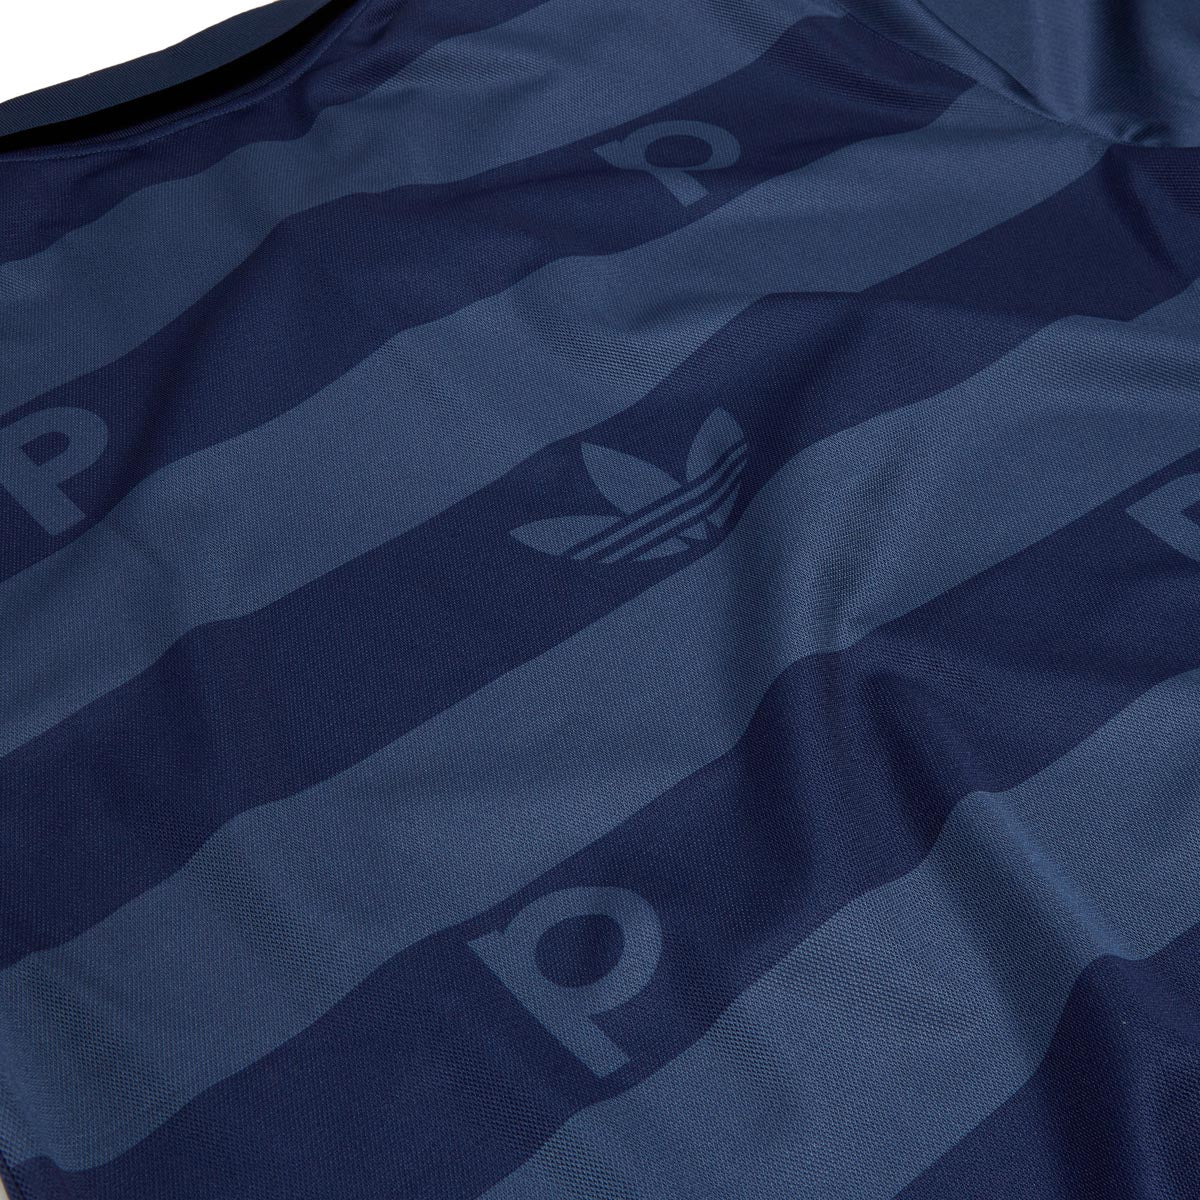 Adidas x Pop Trading Co Polo Shirt - Crew Navy/Collegiate Navy image 3